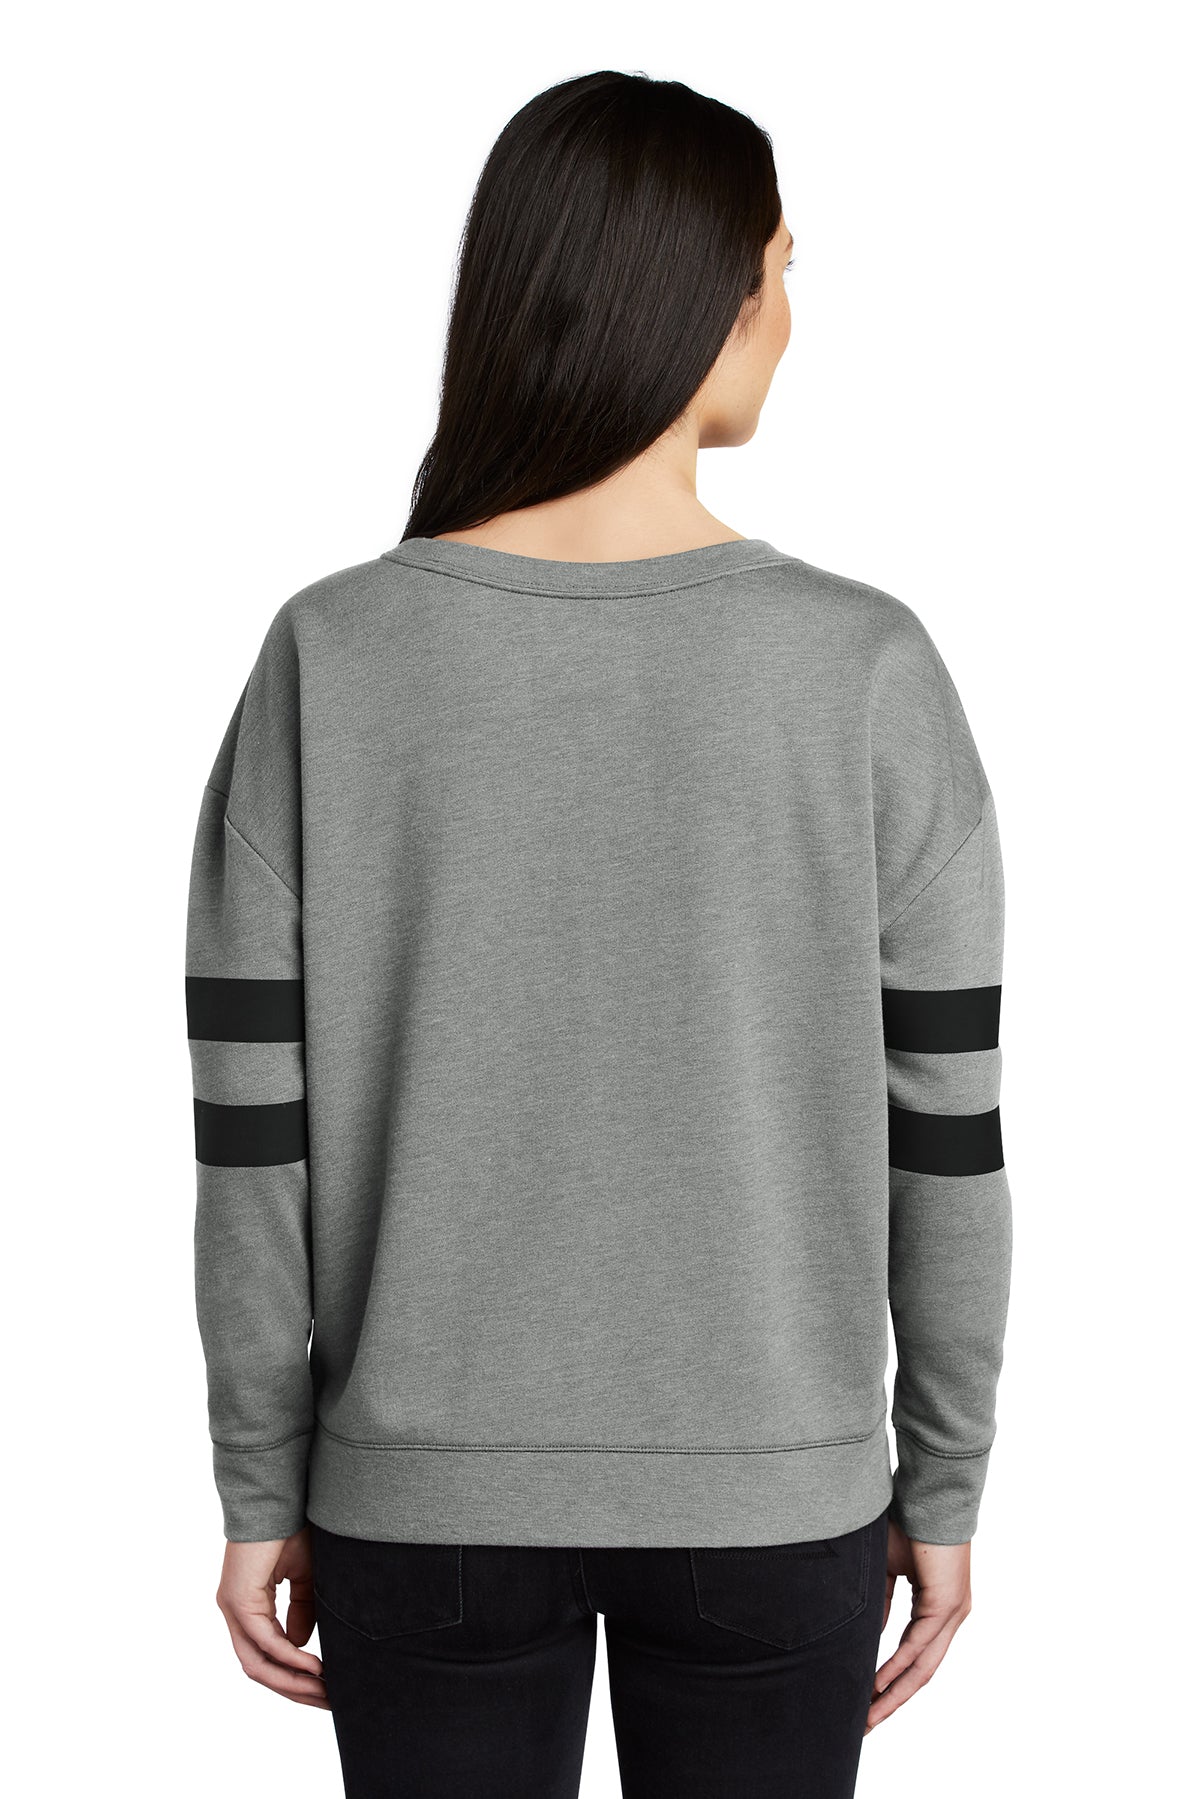 New Era Ladies Tri-Blend Branded Sweatshirts, Shadow Grey Heather